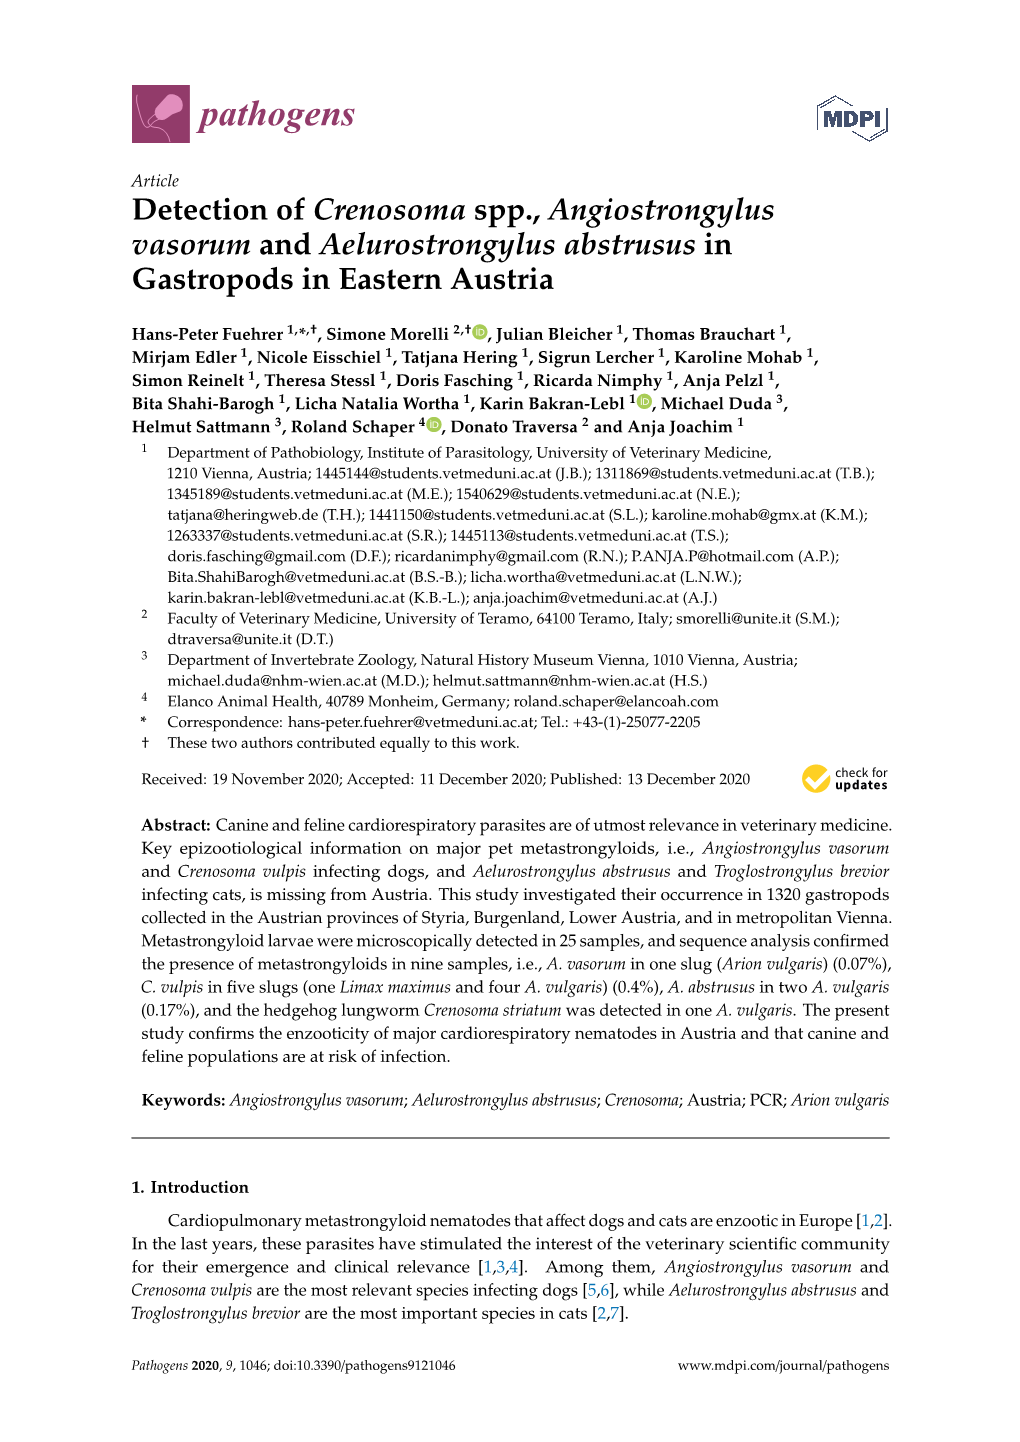 Detection of Crenosoma Spp., Angiostrongylus Vasorum and Aelurostrongylus Abstrusus in Gastropods in Eastern Austria